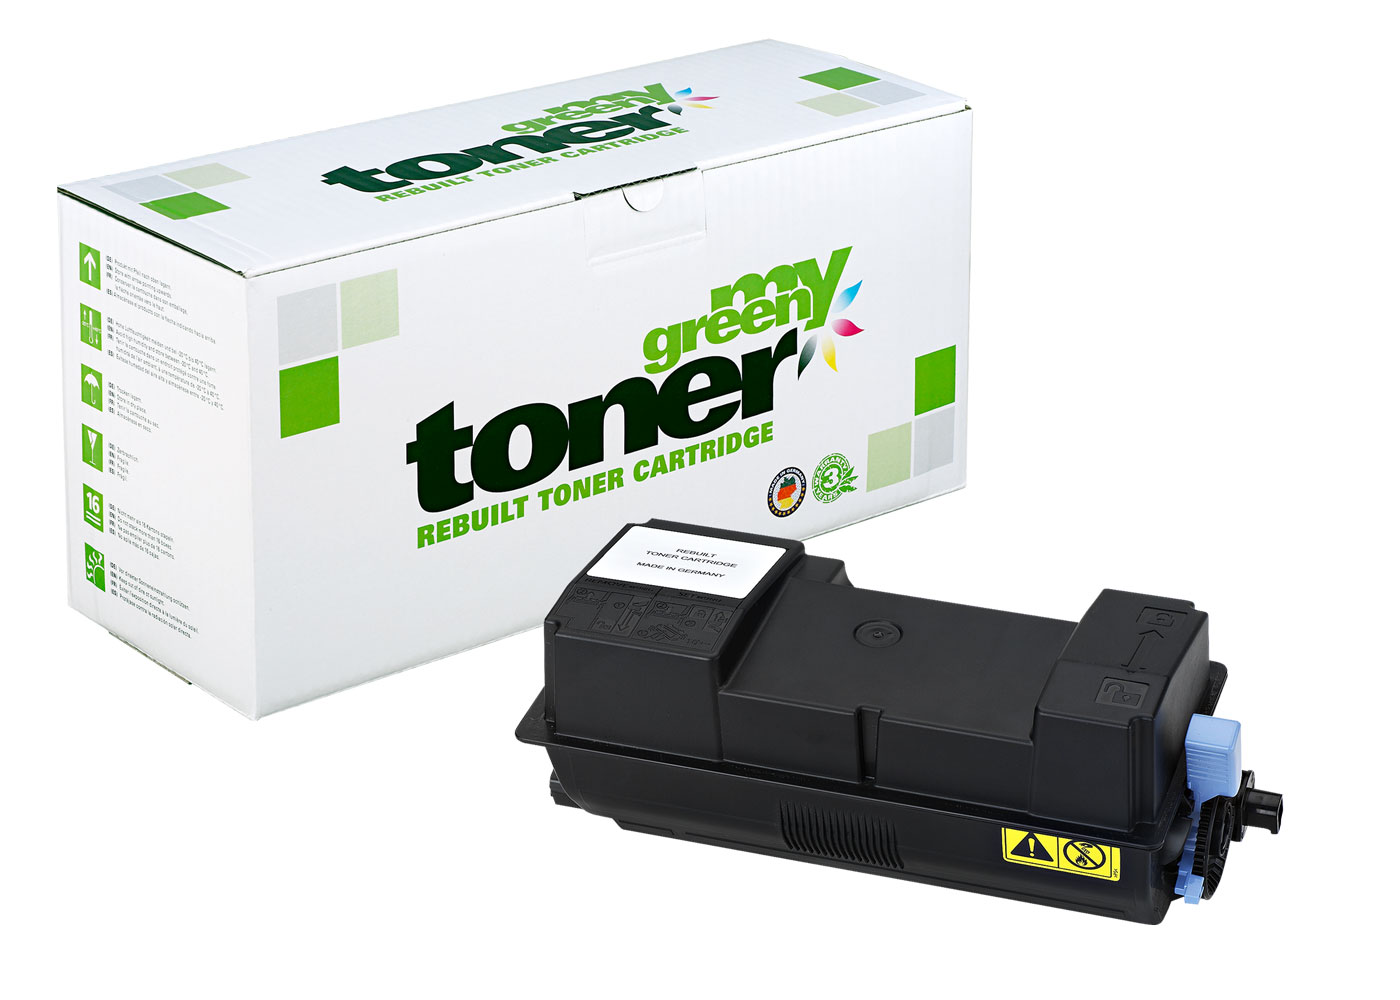 Rebuilt toner cartridge for Kyocera ECOSYS M3860, P3260